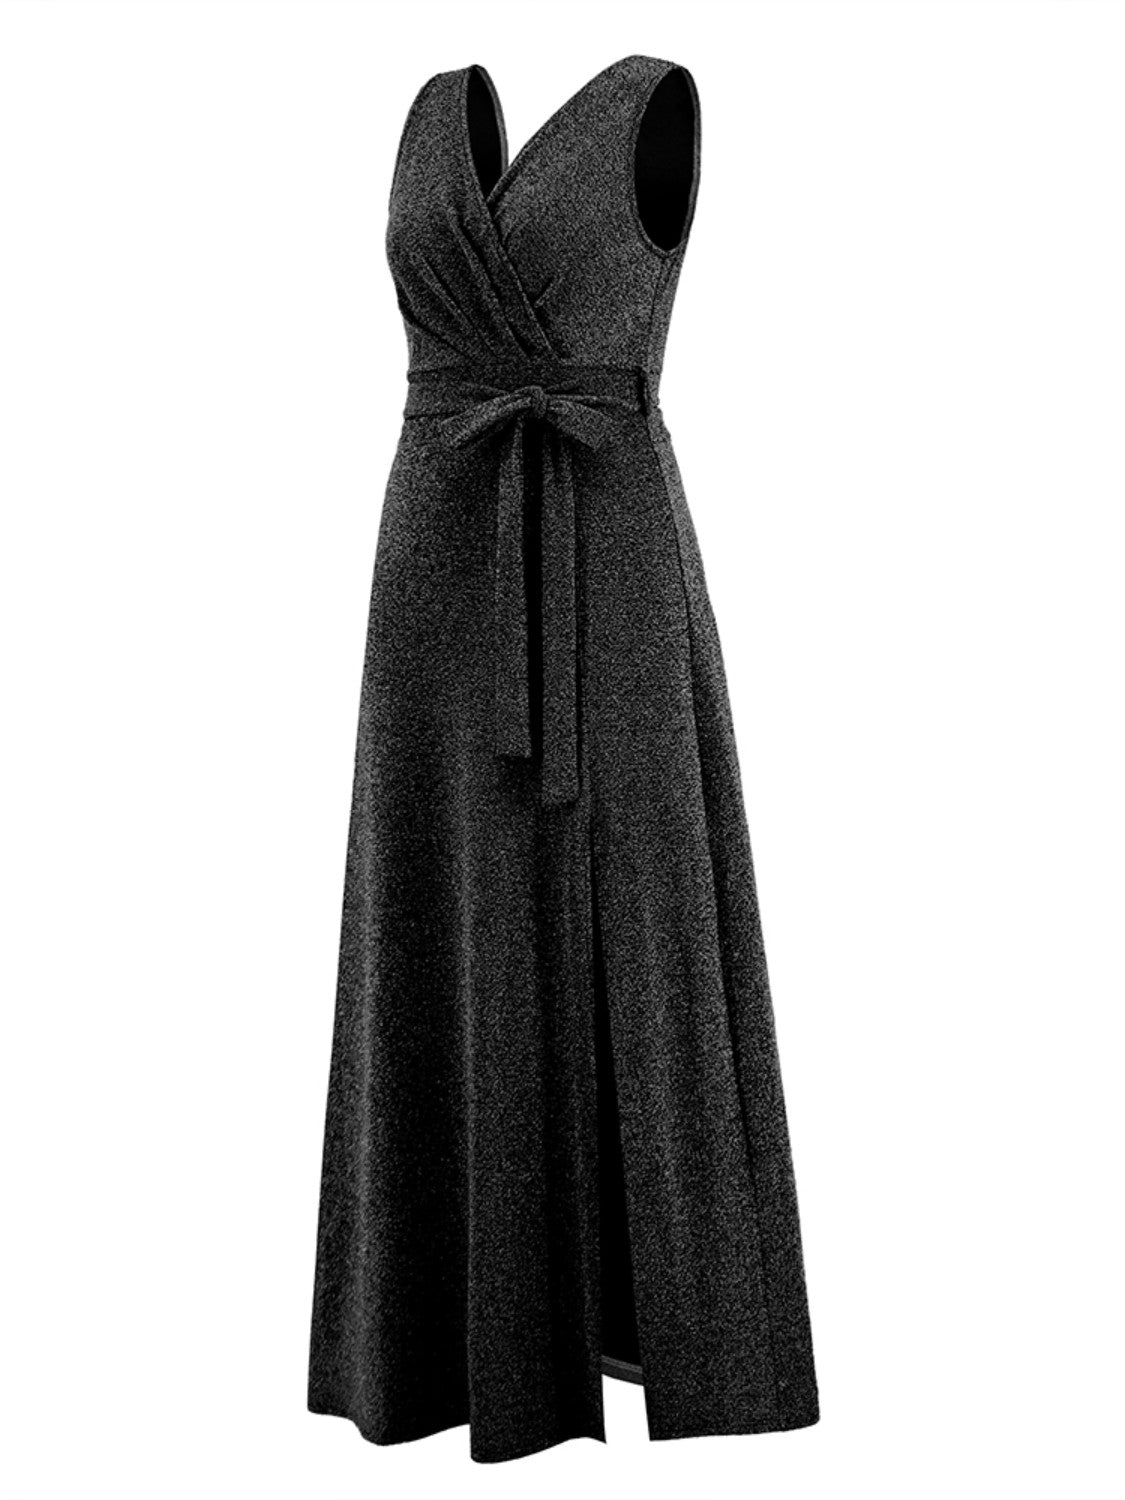 a black dress with a tie on the waist